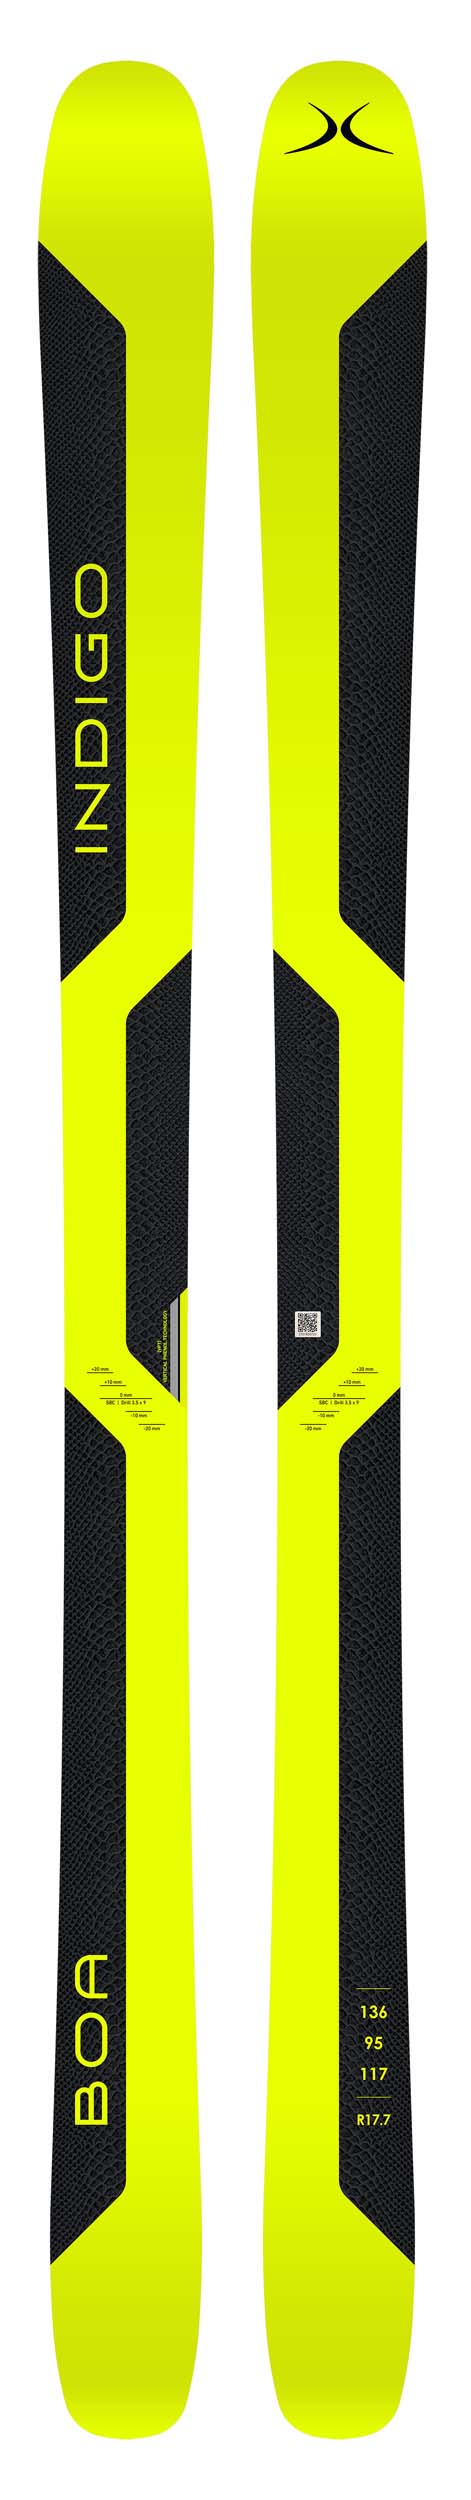 Indigo-Bogner Boa VP2 Skis (Without Bindings / Flat)  NEW !! 170,177,184cm